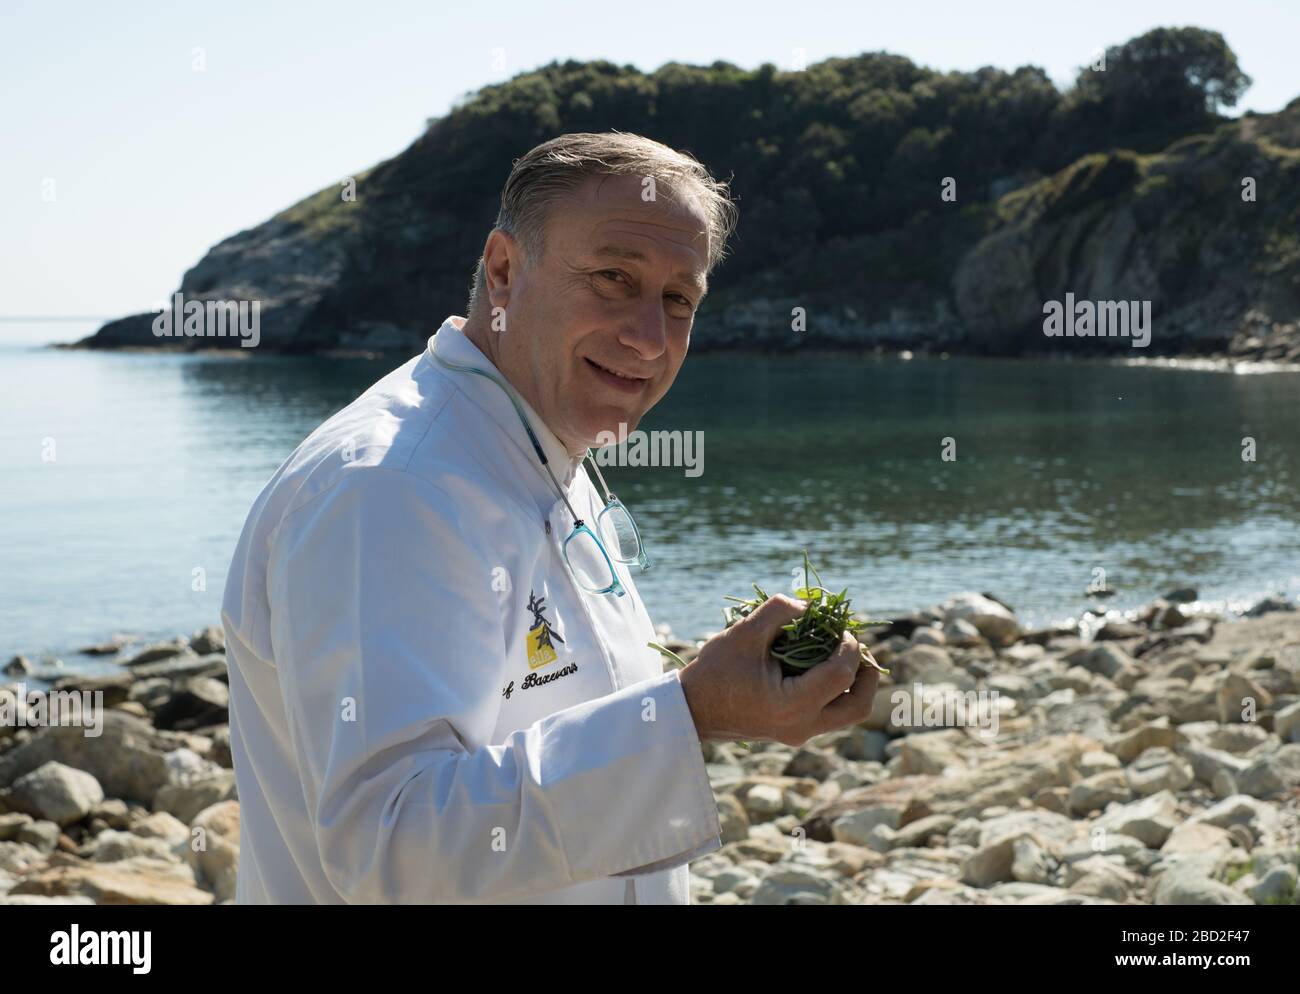 Greek celebrity chef Giannis Baxevanis foraging on Greece's Pelion peninsula Stock Photo